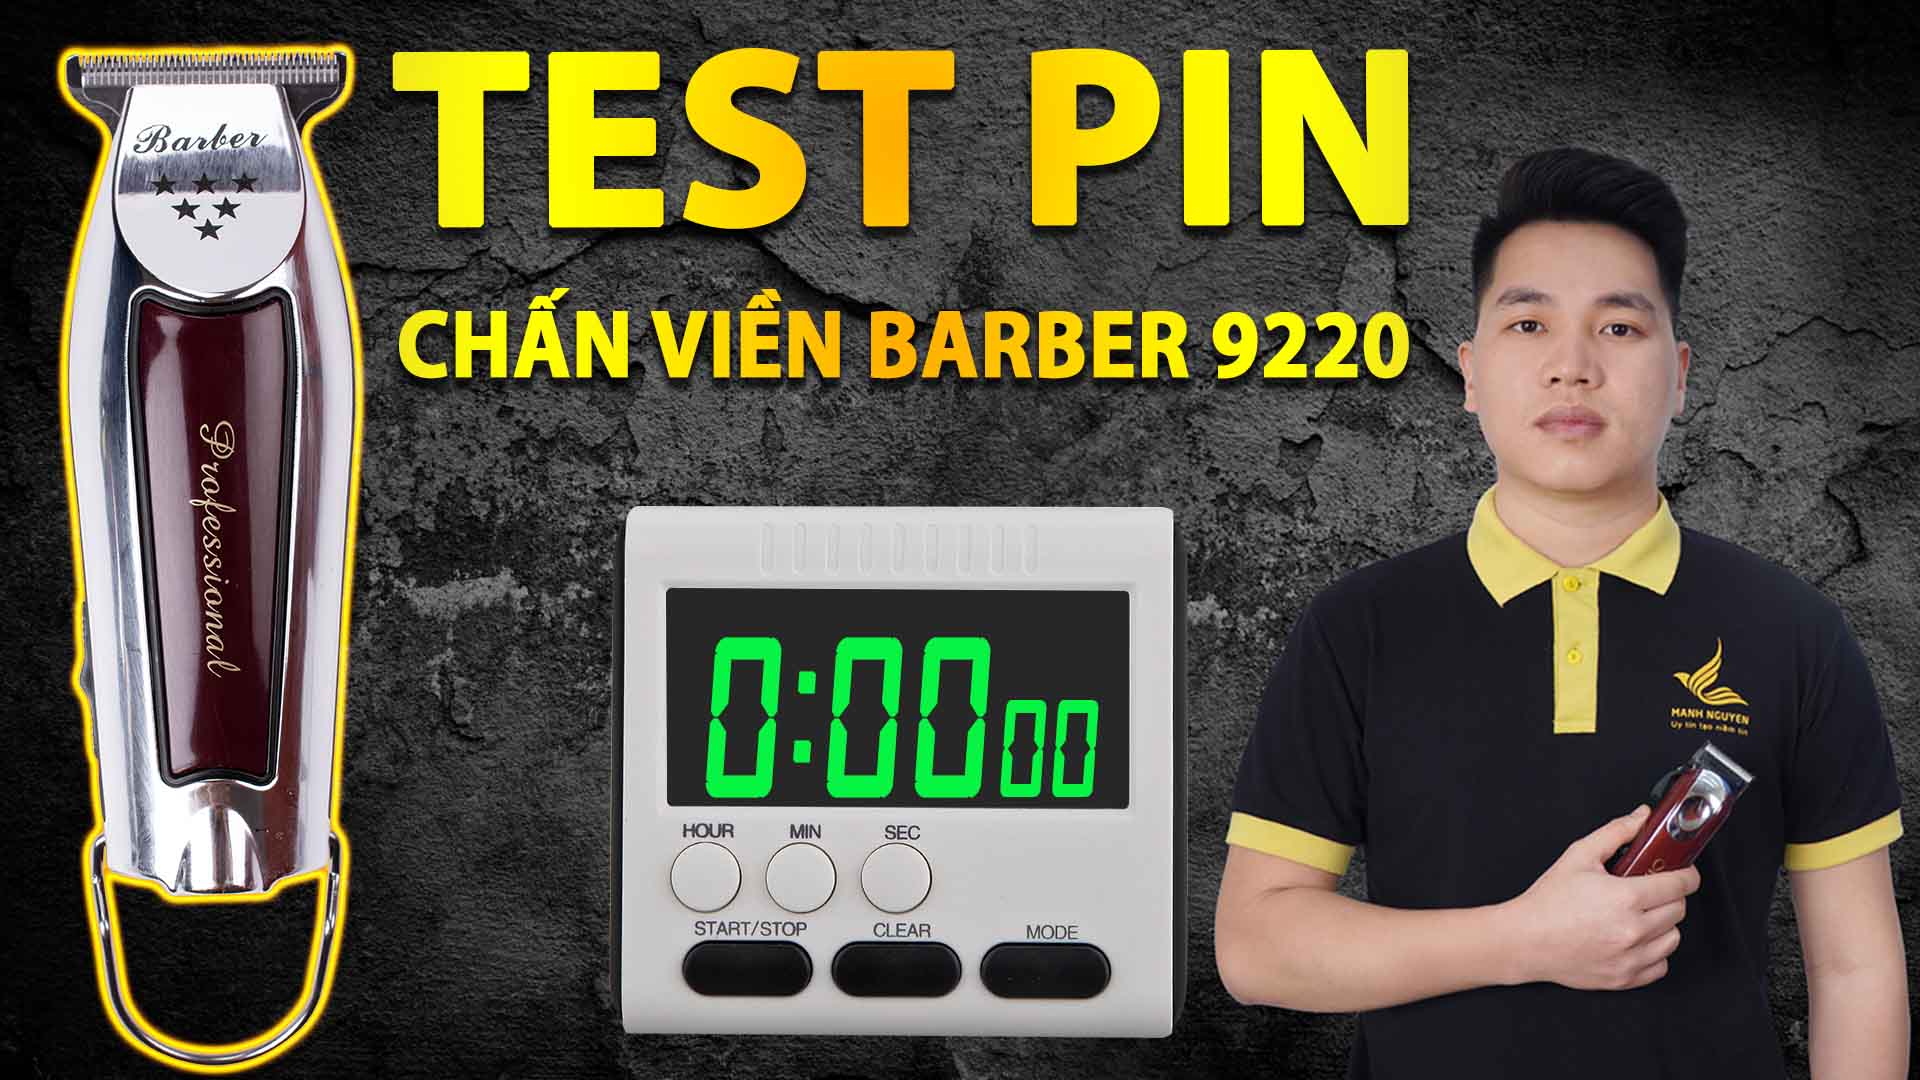 test pin chan vien barber 9220 (1)